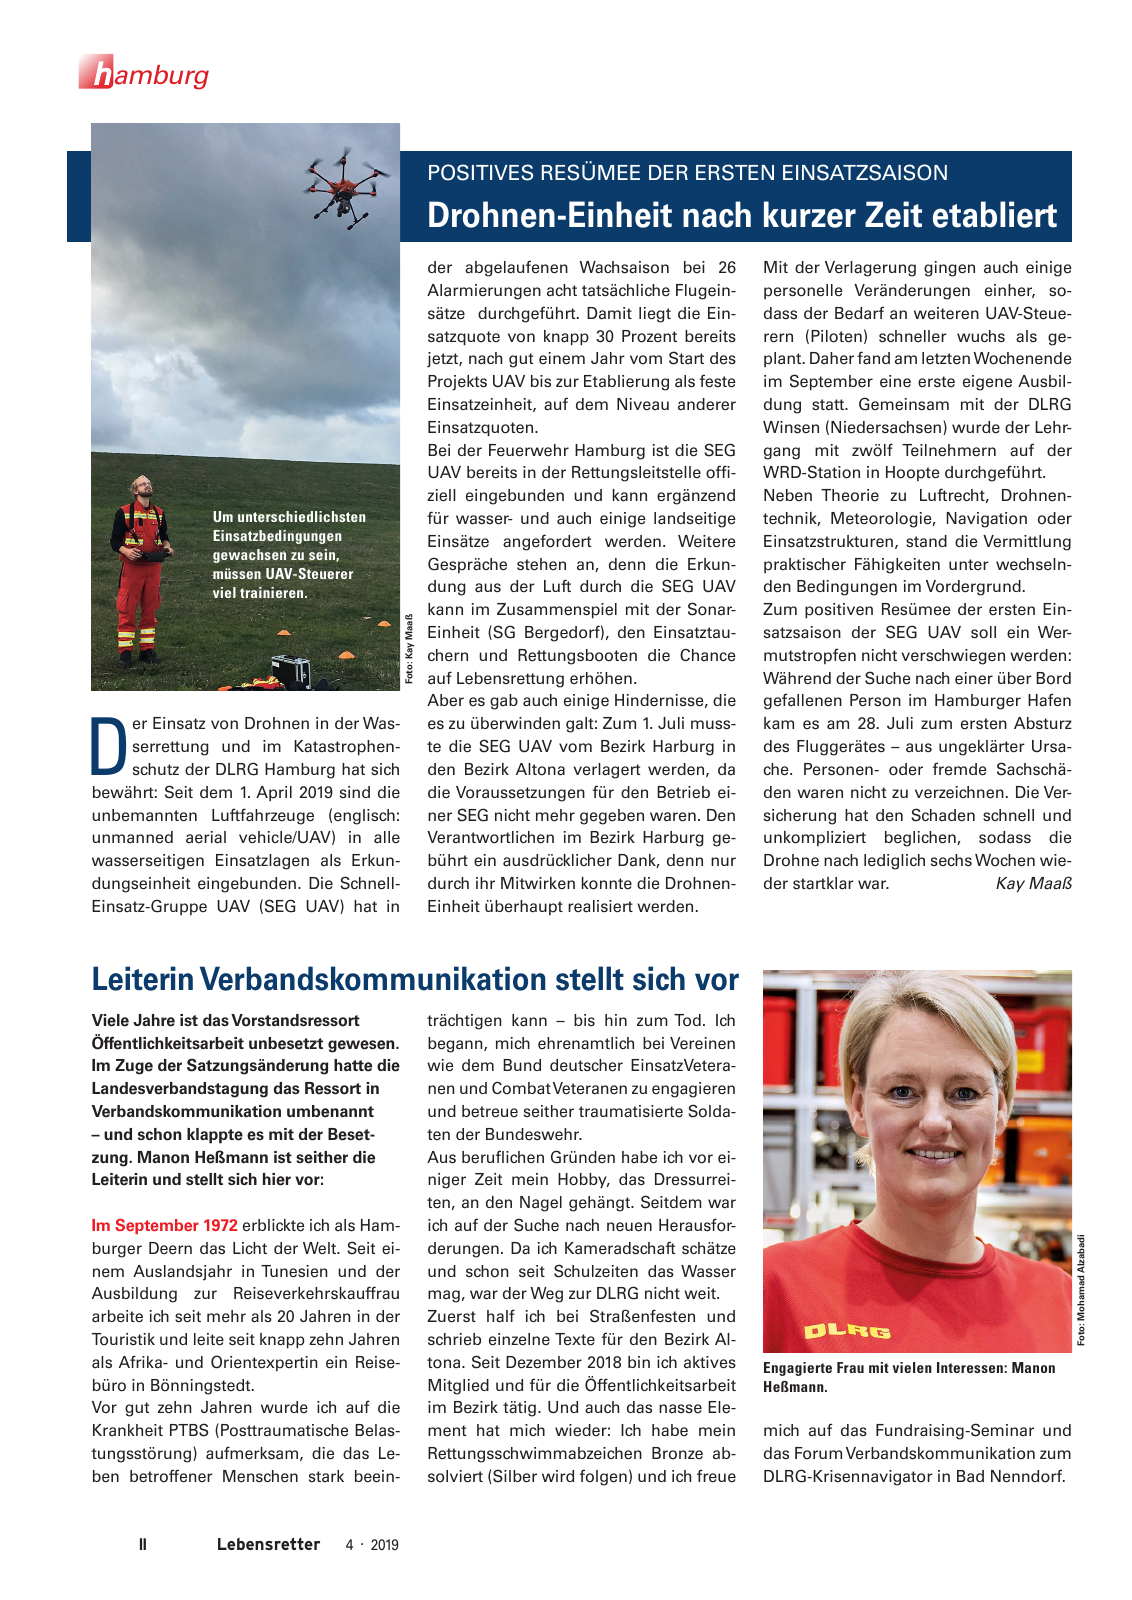 Vorschau Lebensretter 4/2019 -  Hamburg Regionalausgabe Seite 4